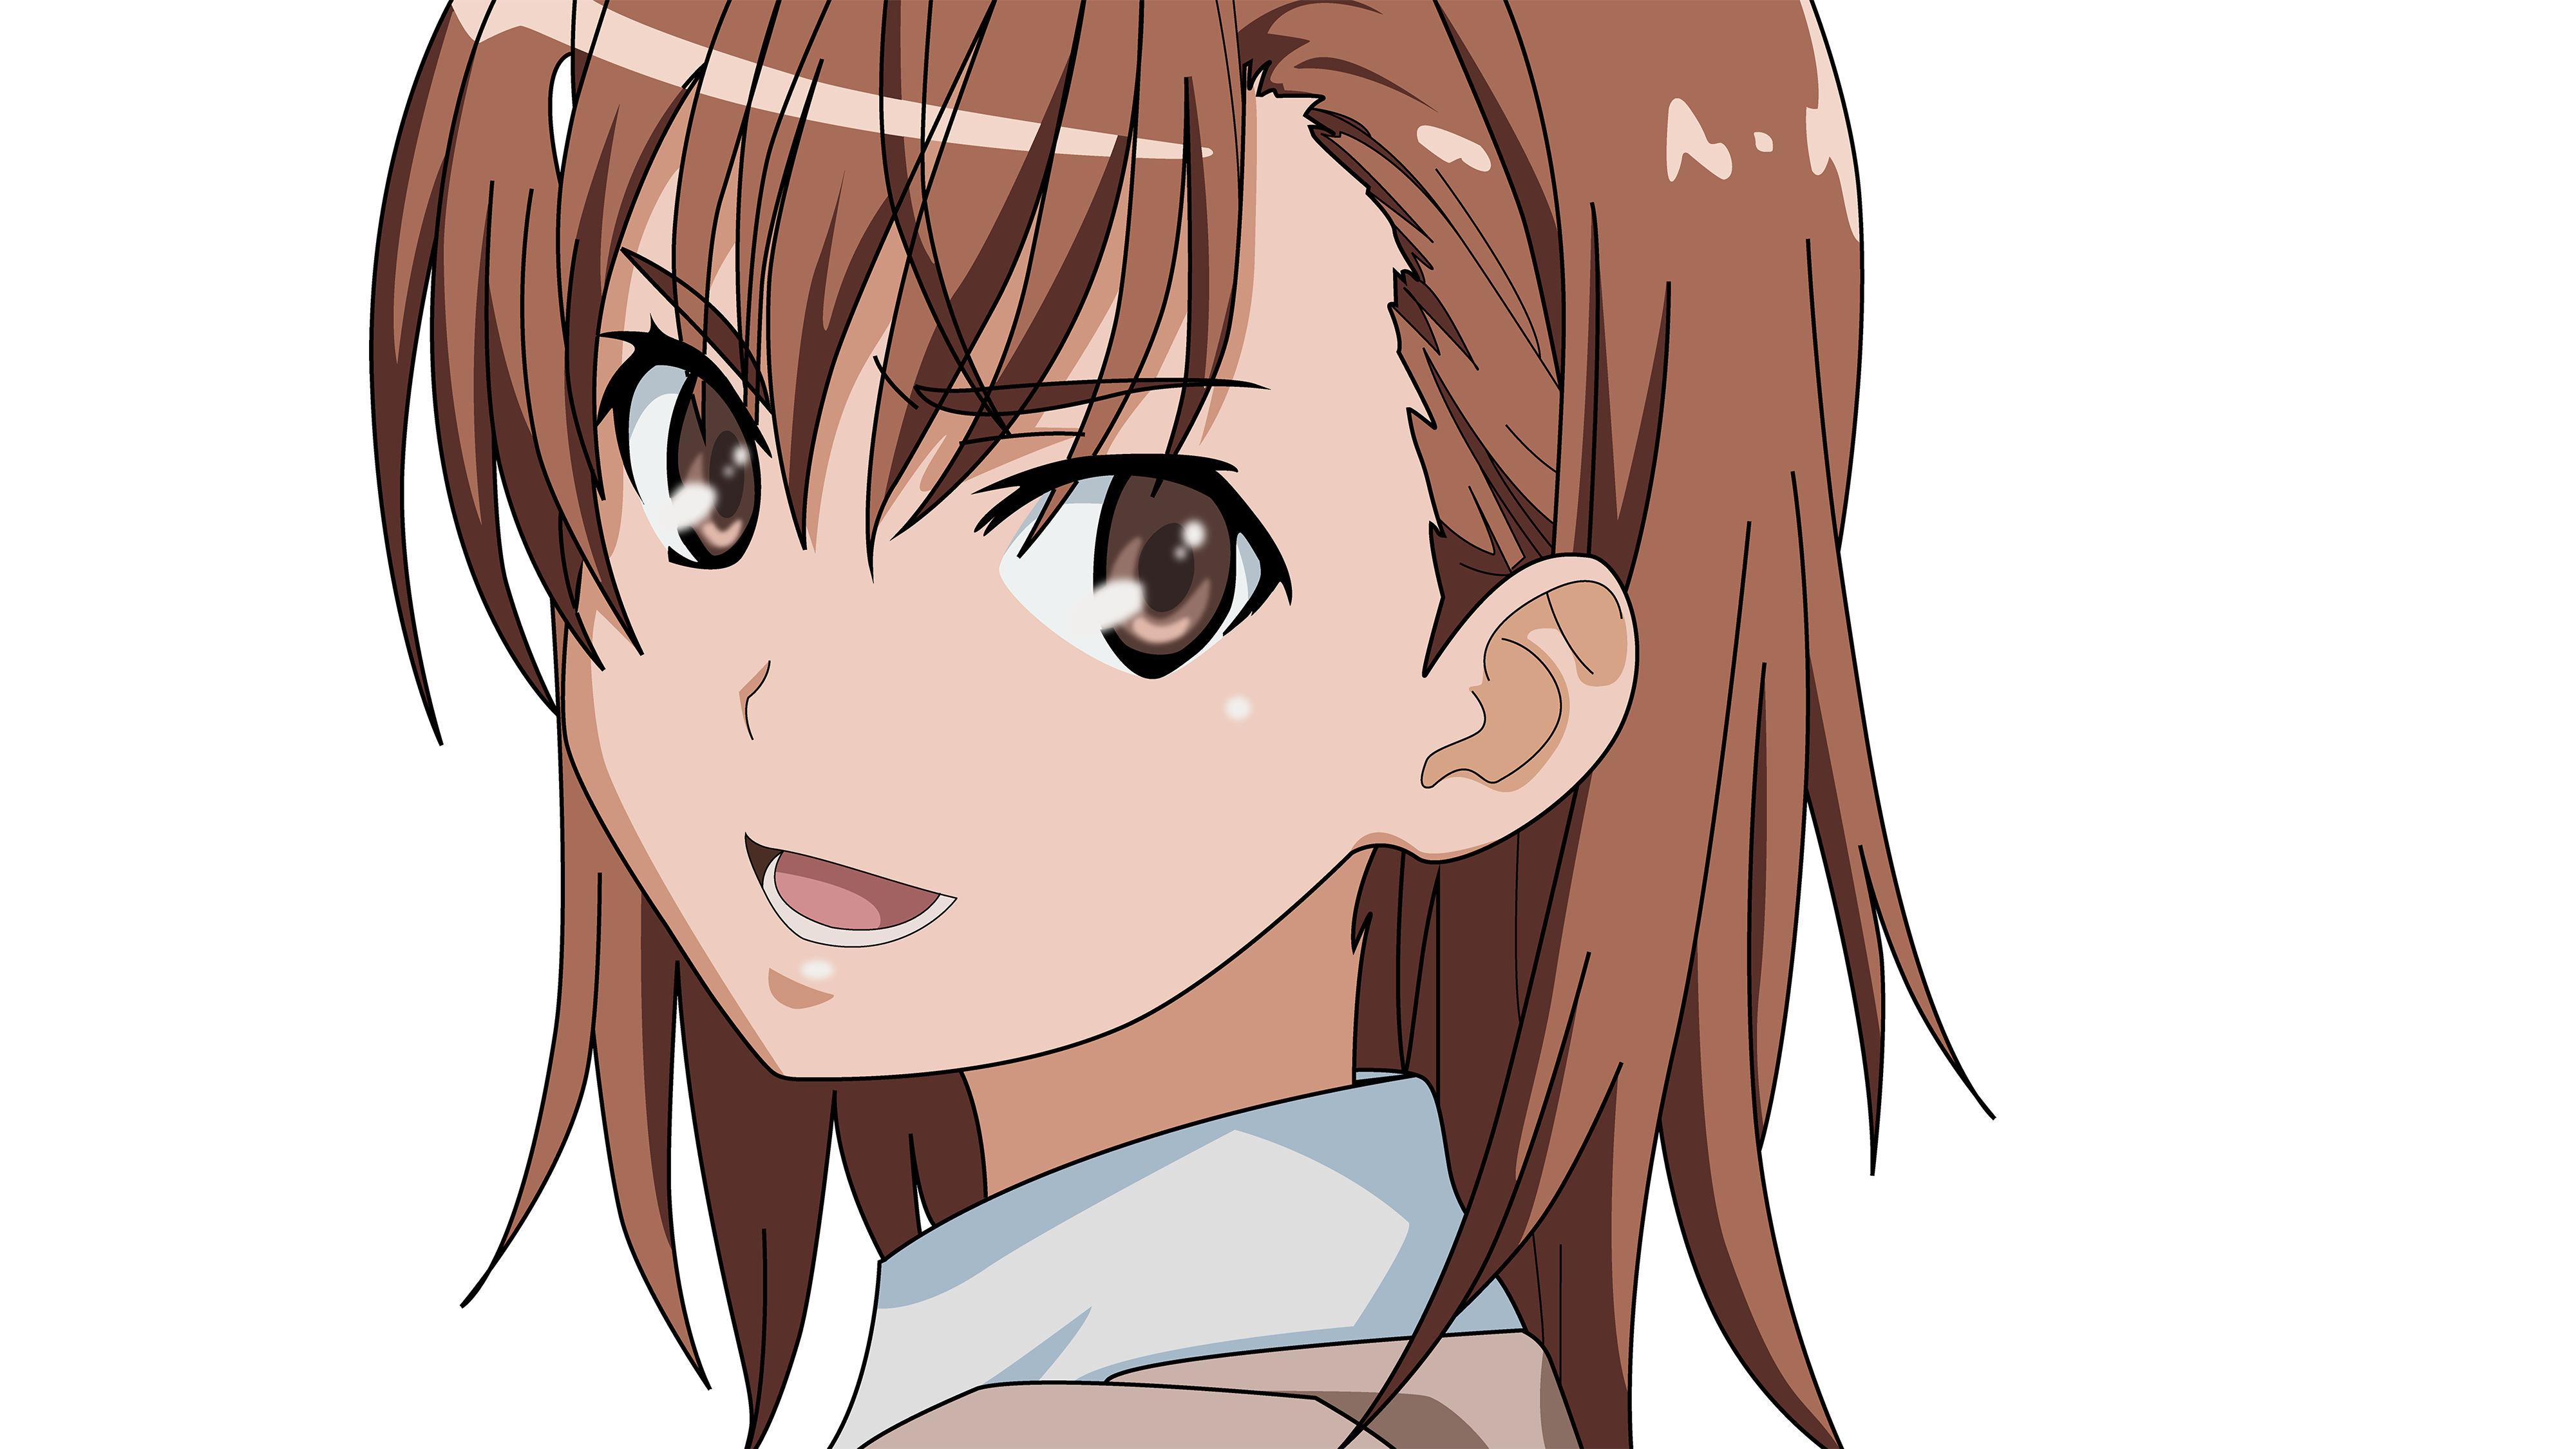 Mikoto Misaka A Certain Scientific Railgun Accelerator A Certain Magical Index Anime Face Png Download 4000 2250 Free Transparent Png Download Clip Art Library